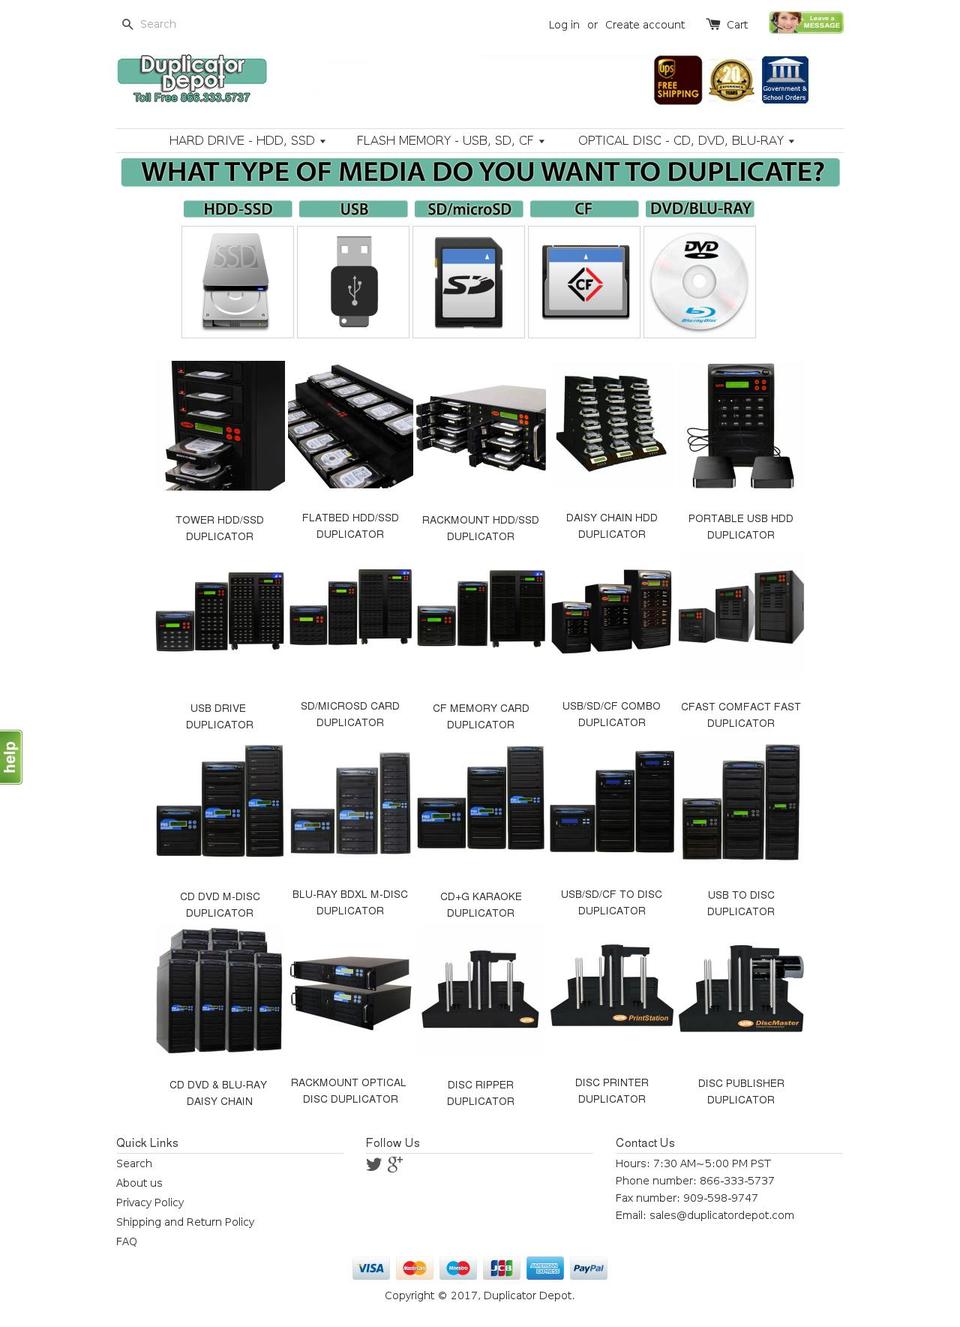 duplicatordepot.com shopify website screenshot